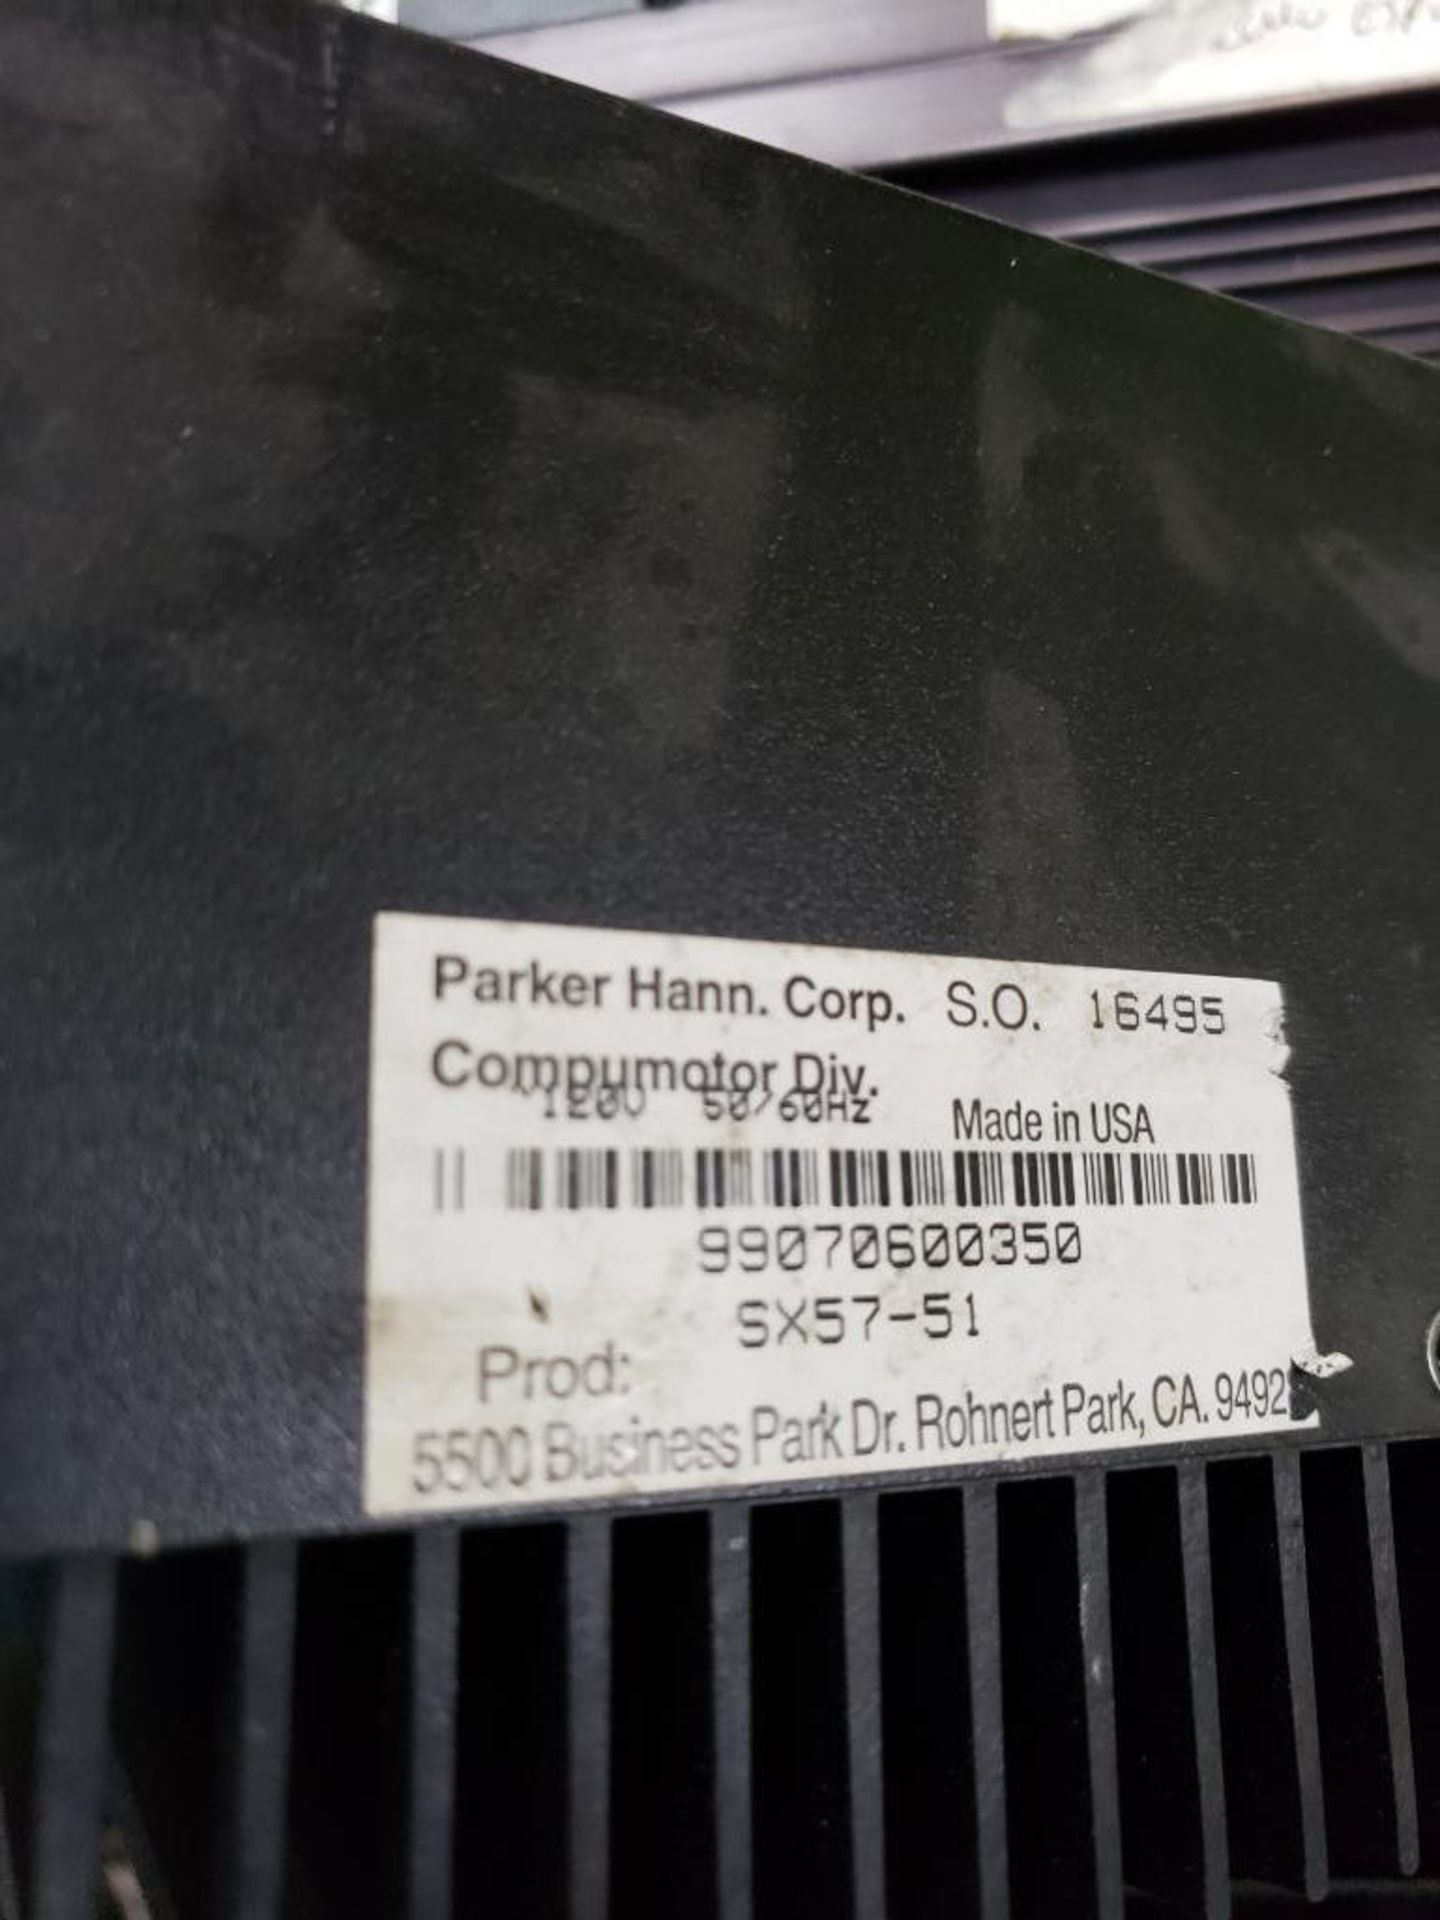 Parker Compumotor drive model SX57-51. - Image 3 of 3